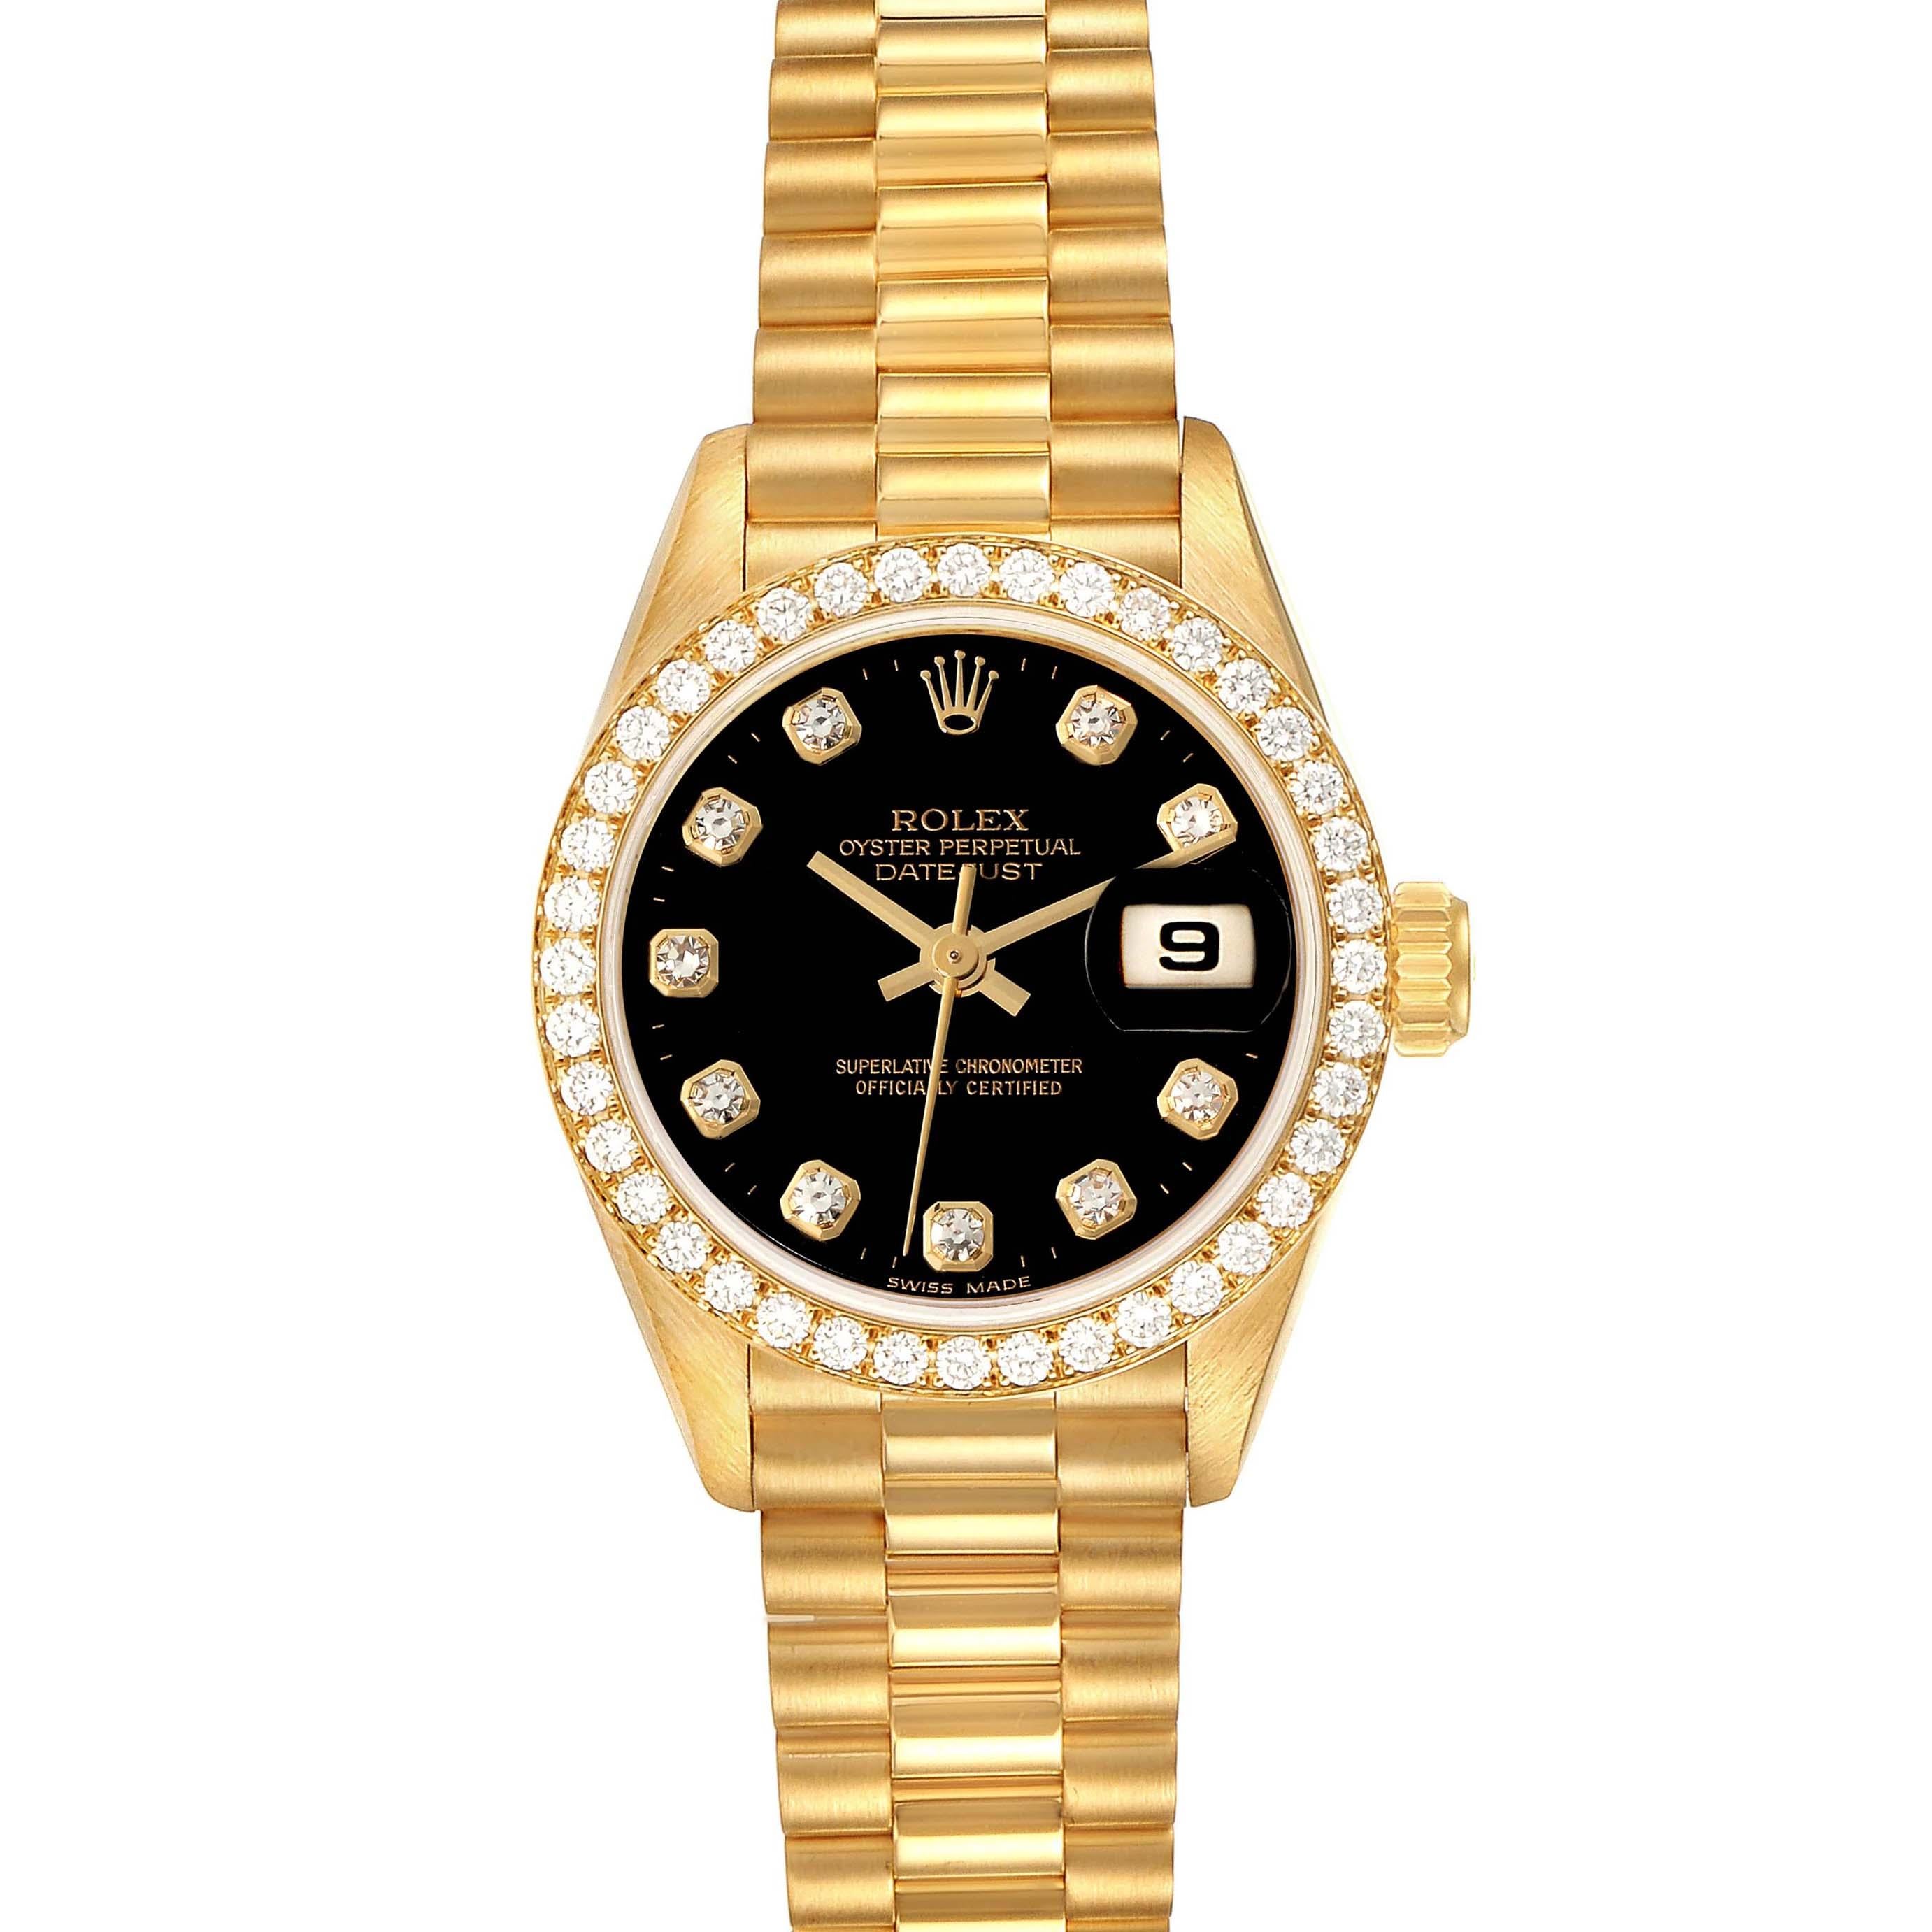 Rolex President Datejust Yellow Gold Black Diamond Dial Watch 69138. Officially certified chronometer self-winding movement. 18k yellow gold oyster case 26.0 mm in diameter. Rolex logo on a crown. Original Rolex factory diamond bezel. Scratch